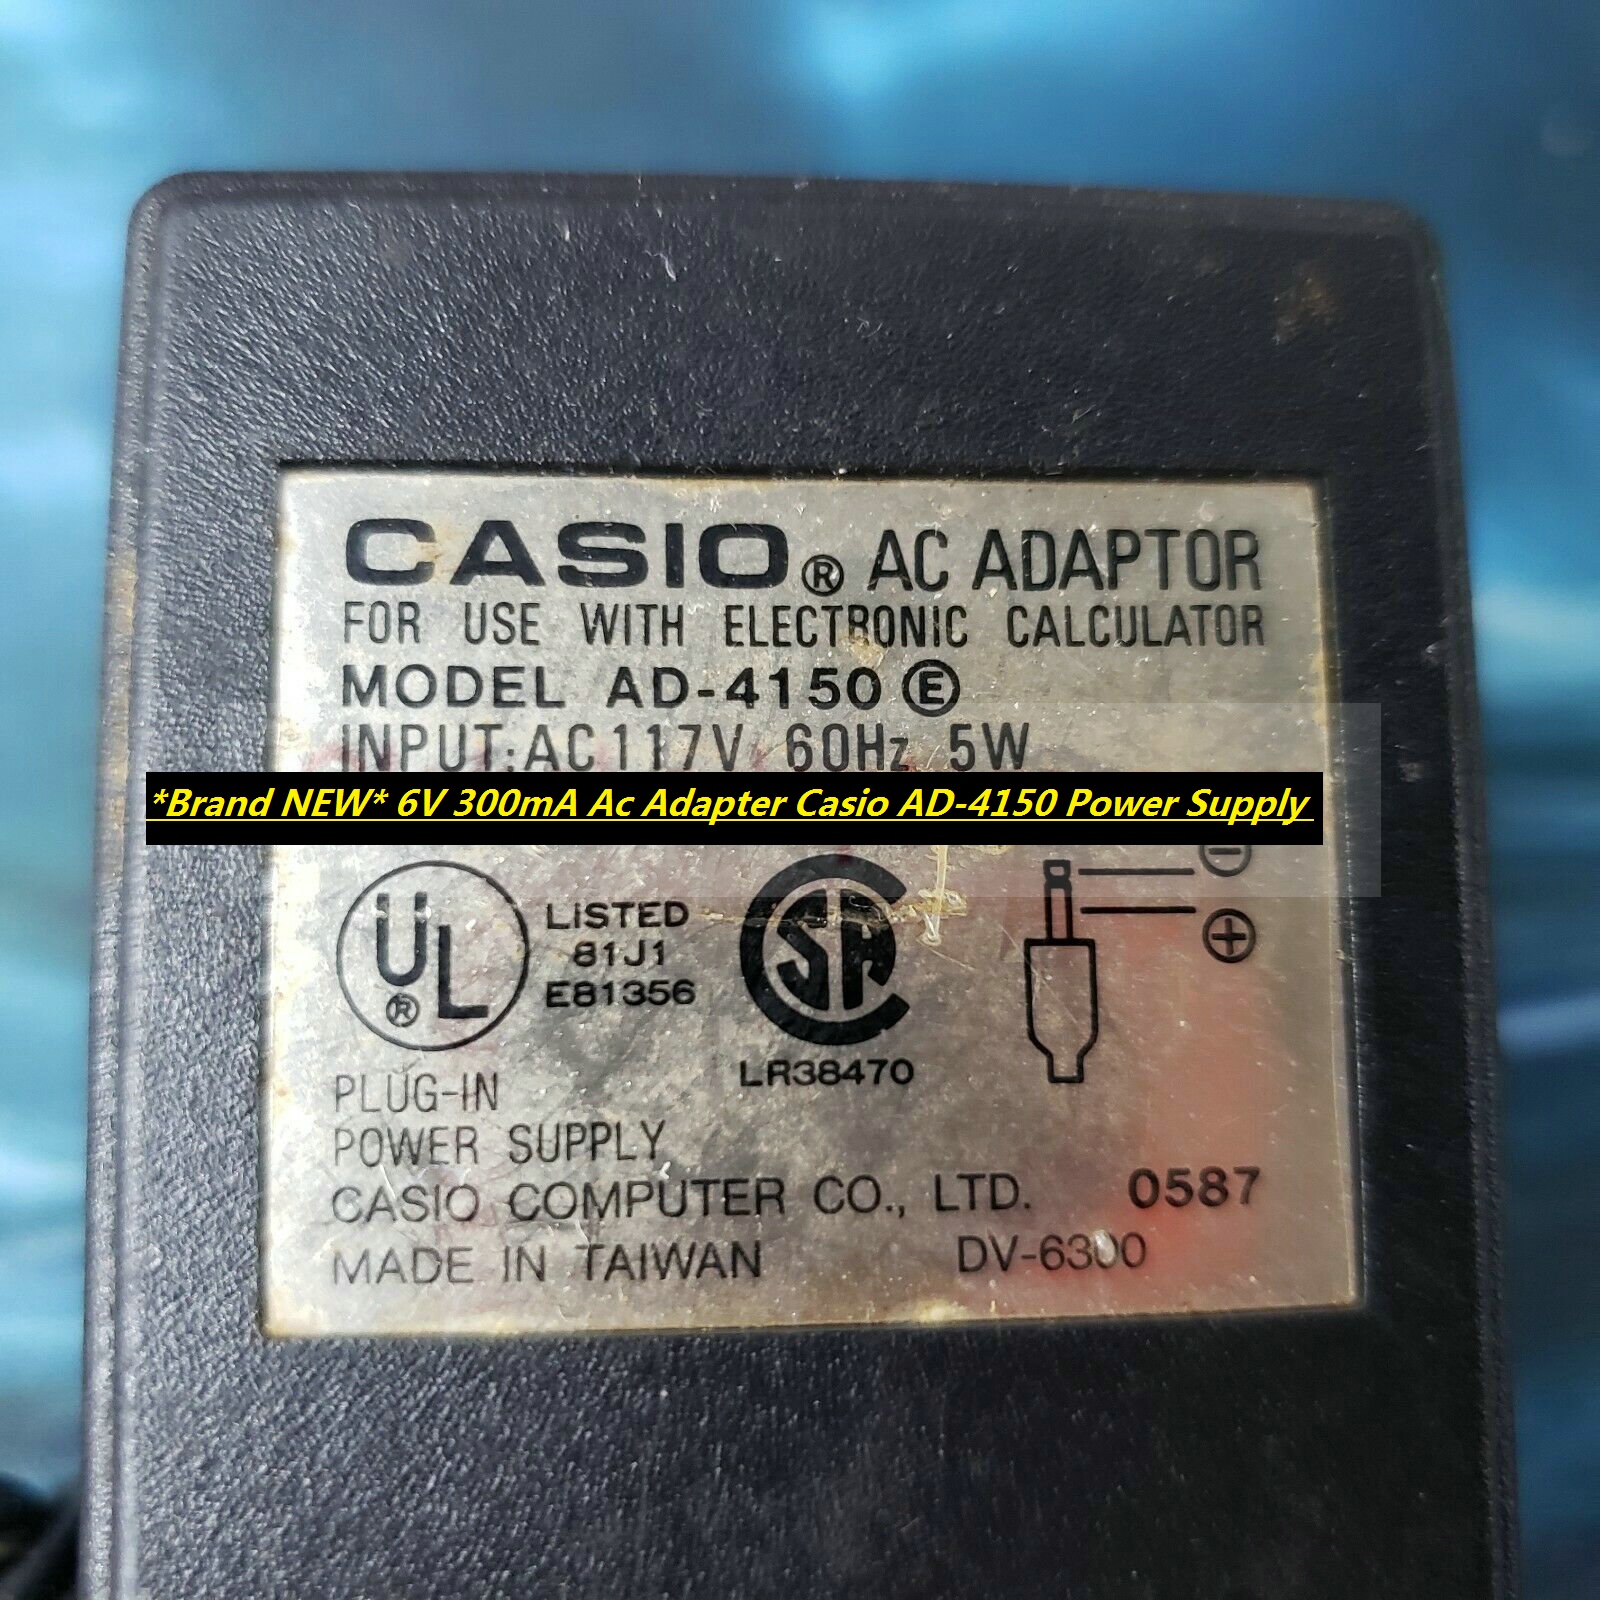 *Brand NEW* 6V 300mA Ac Adapter Casio AD-4150 Power Supply